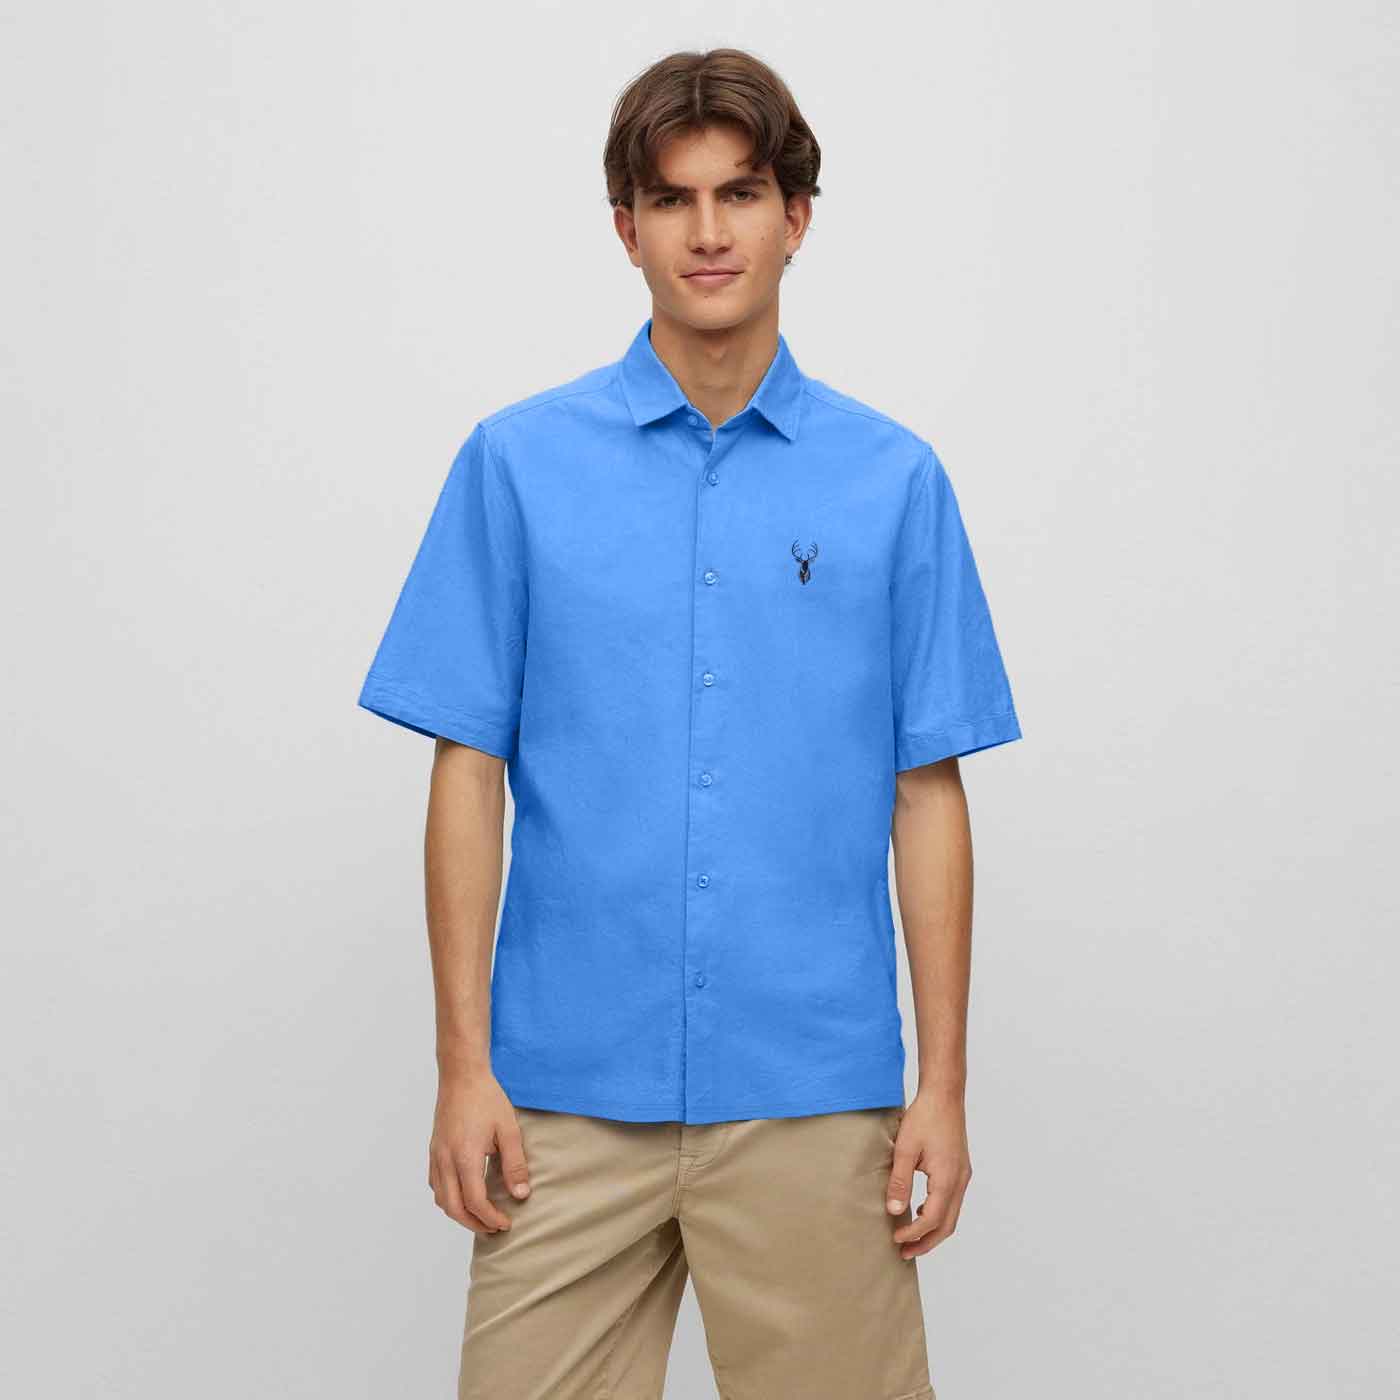 Polo Republica Men's Deer Embroidered Short Sleeves Casual Shirt Men's Casual Shirt Polo Republica Aqua Blue S 